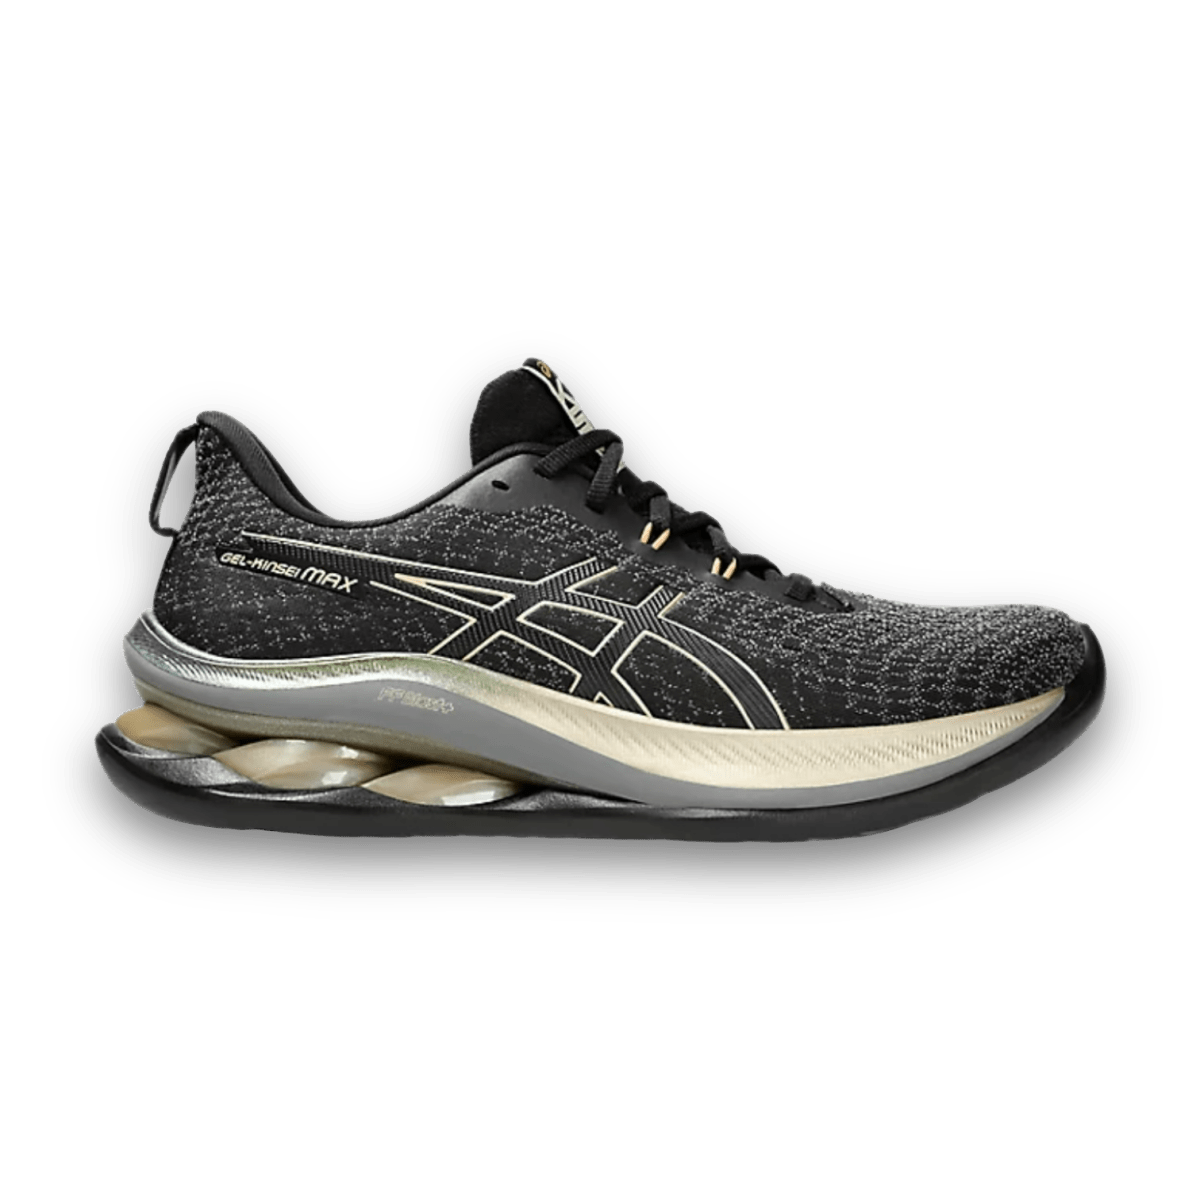 Asics Gel-Kinsei Max Platinum - Black - Low Sneaker - Jawns on Fire Sneakers & Streetwear